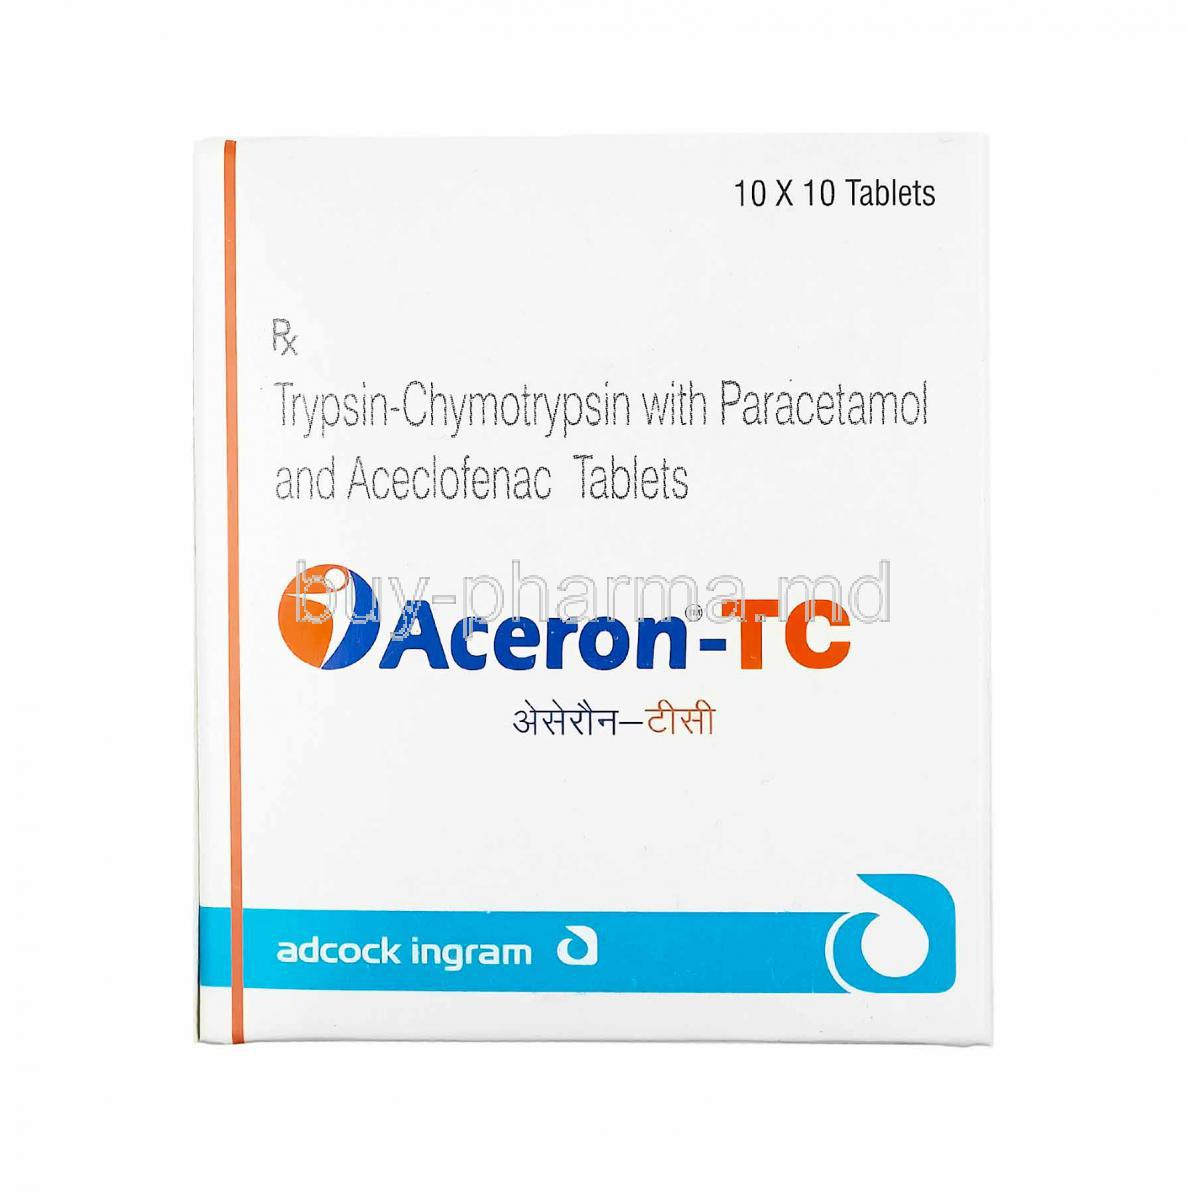 Aceron TC, Aceclofenac, Paracetamol and Trypsin Chymotrypsin